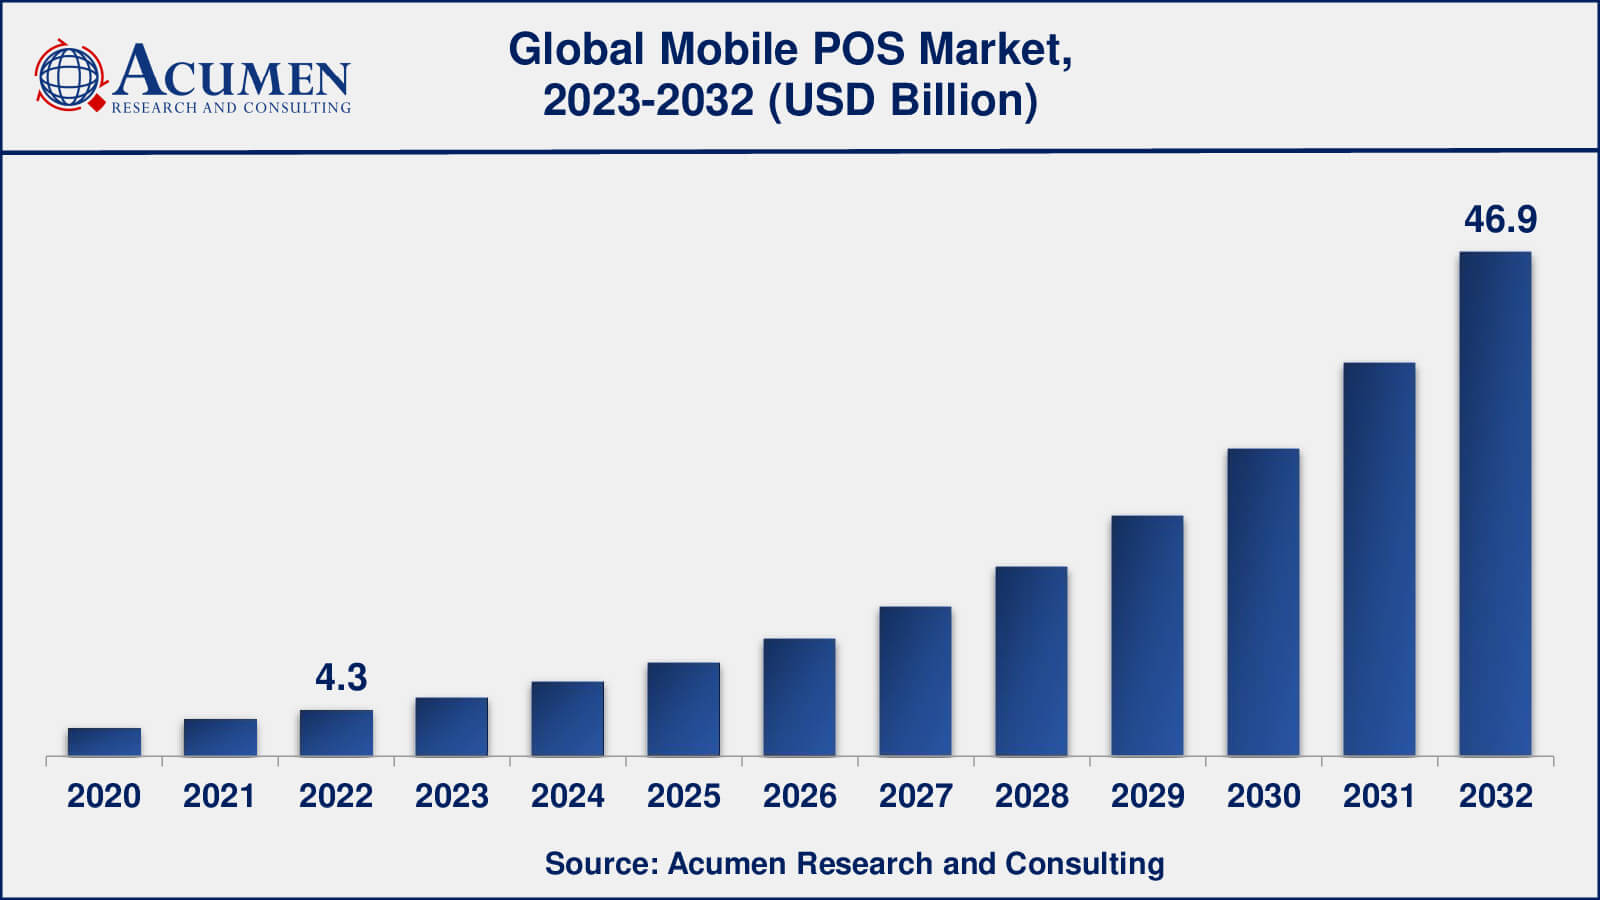 Global Mobile POS Market Dynamics